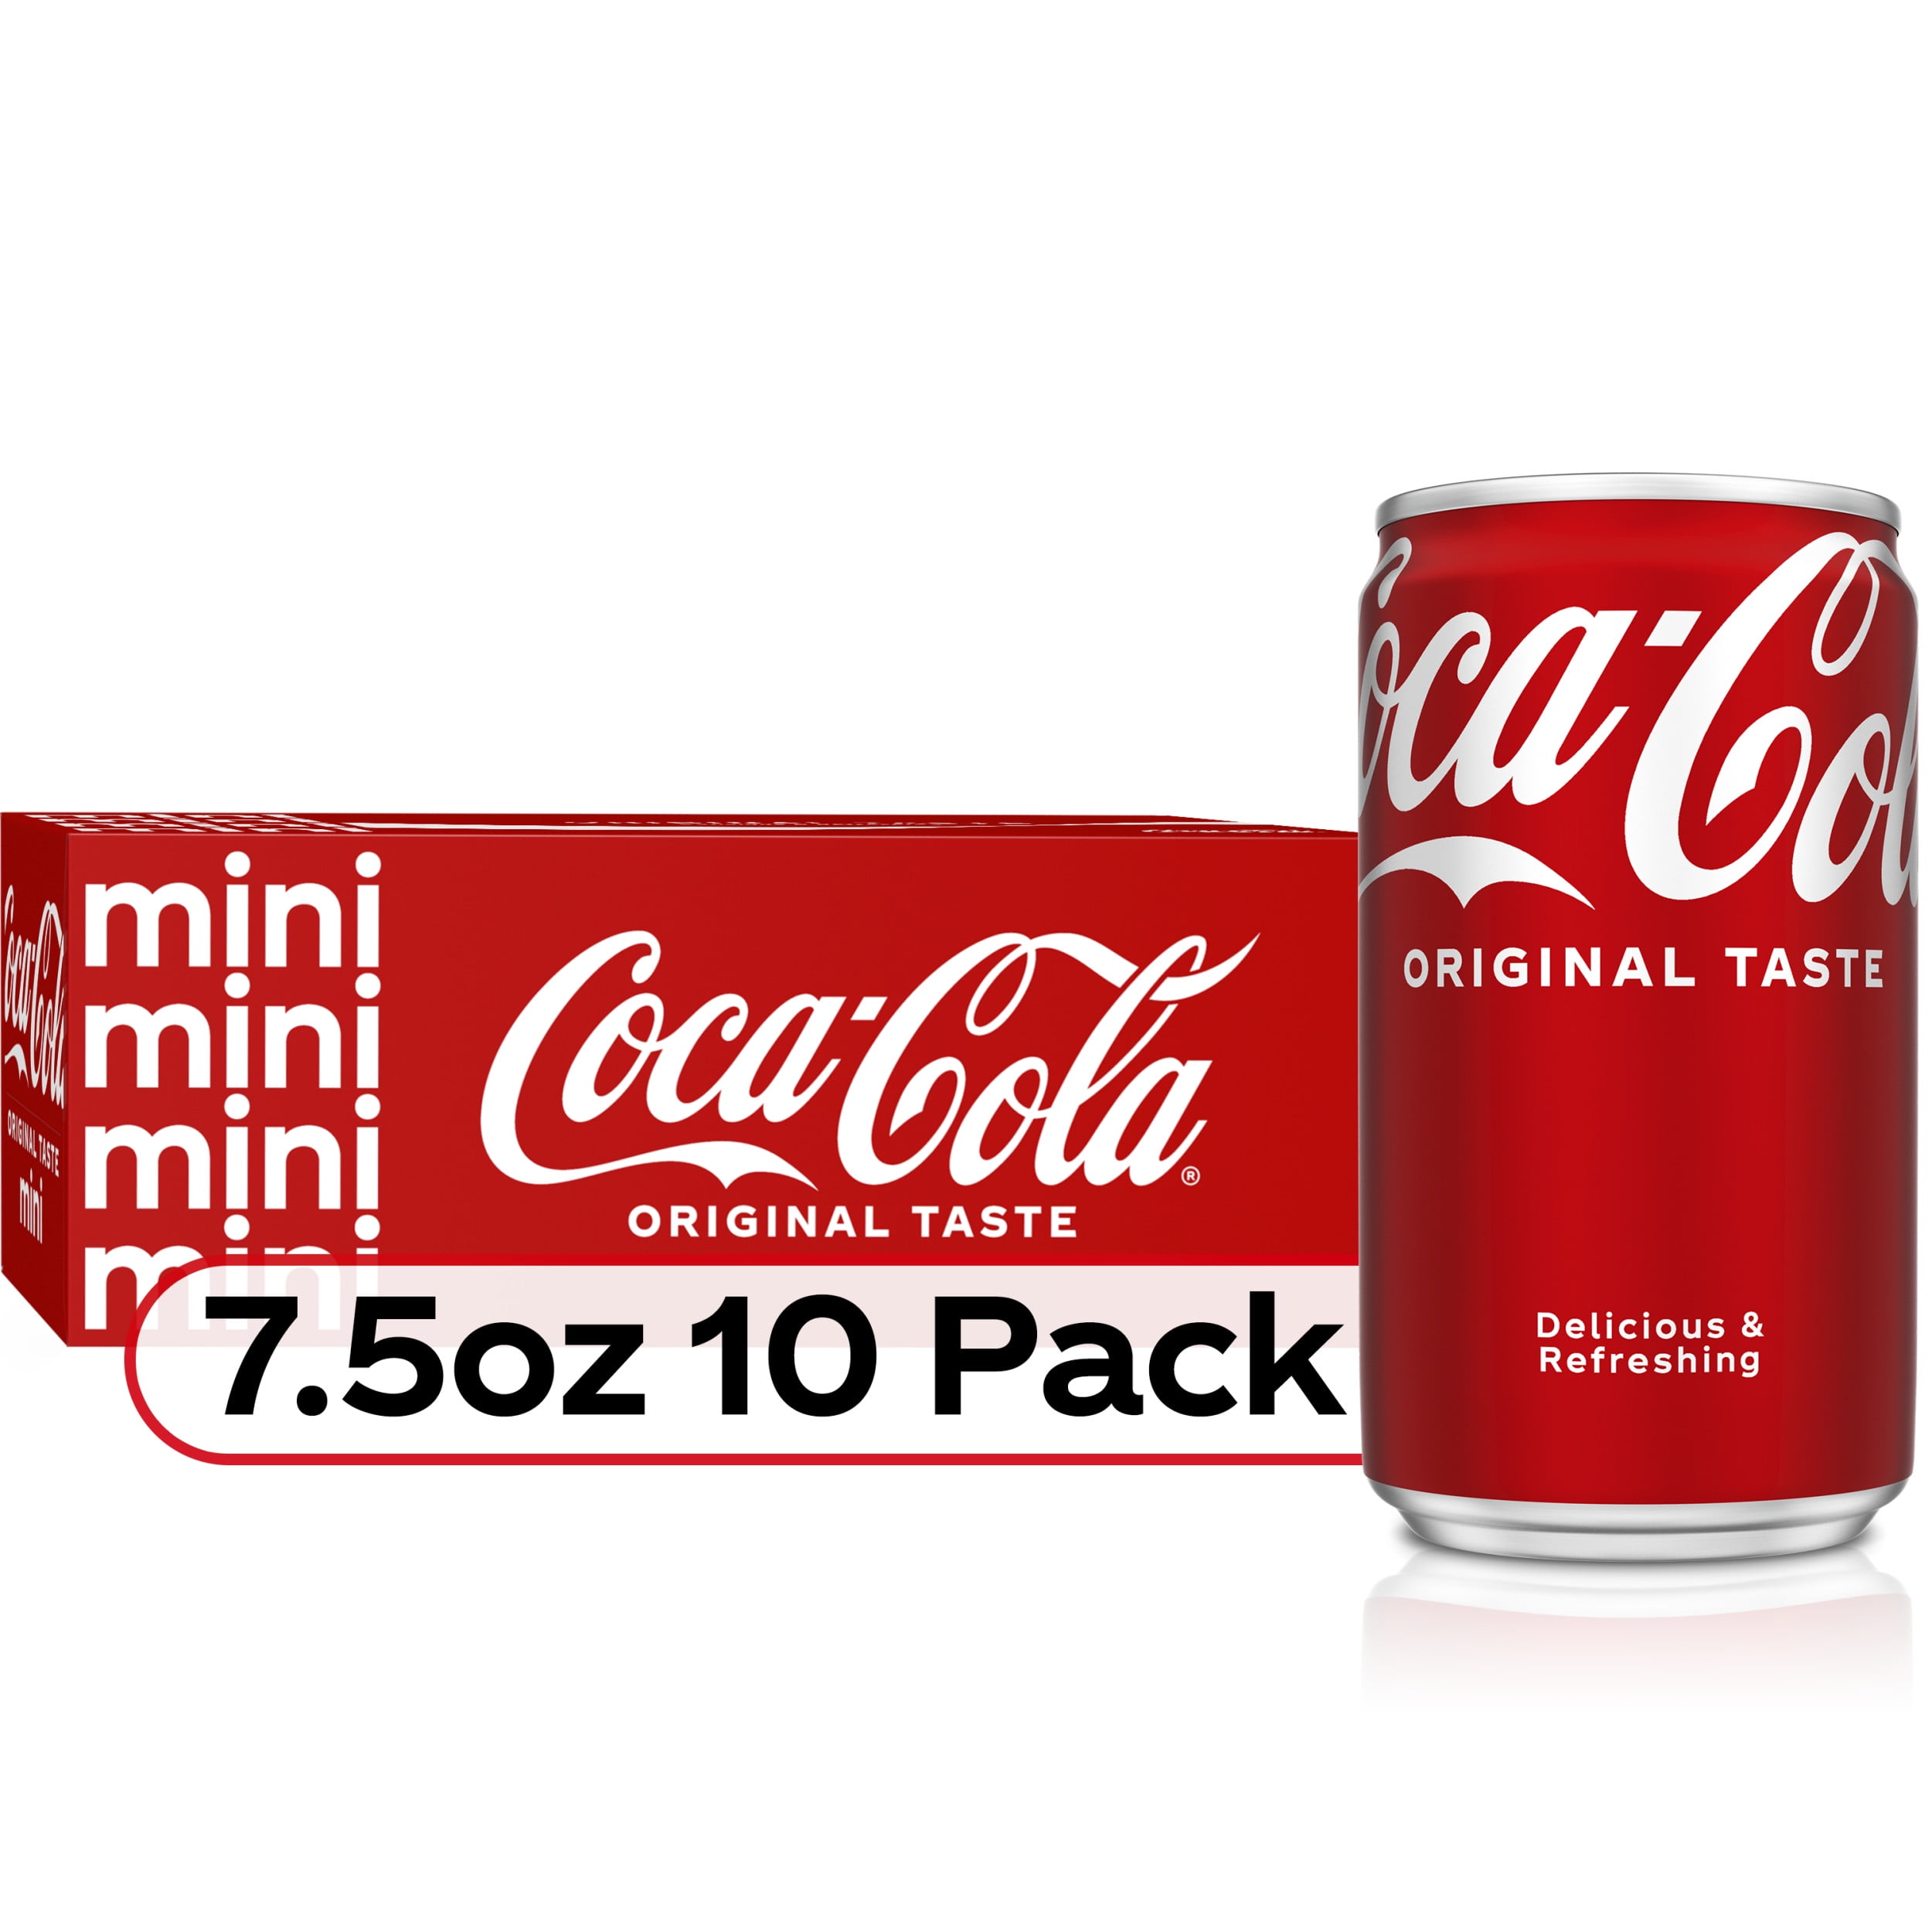 Coca-Cola Mini Soda Pop Soft Drink, 7.5 fl oz, 10 Pack Cans